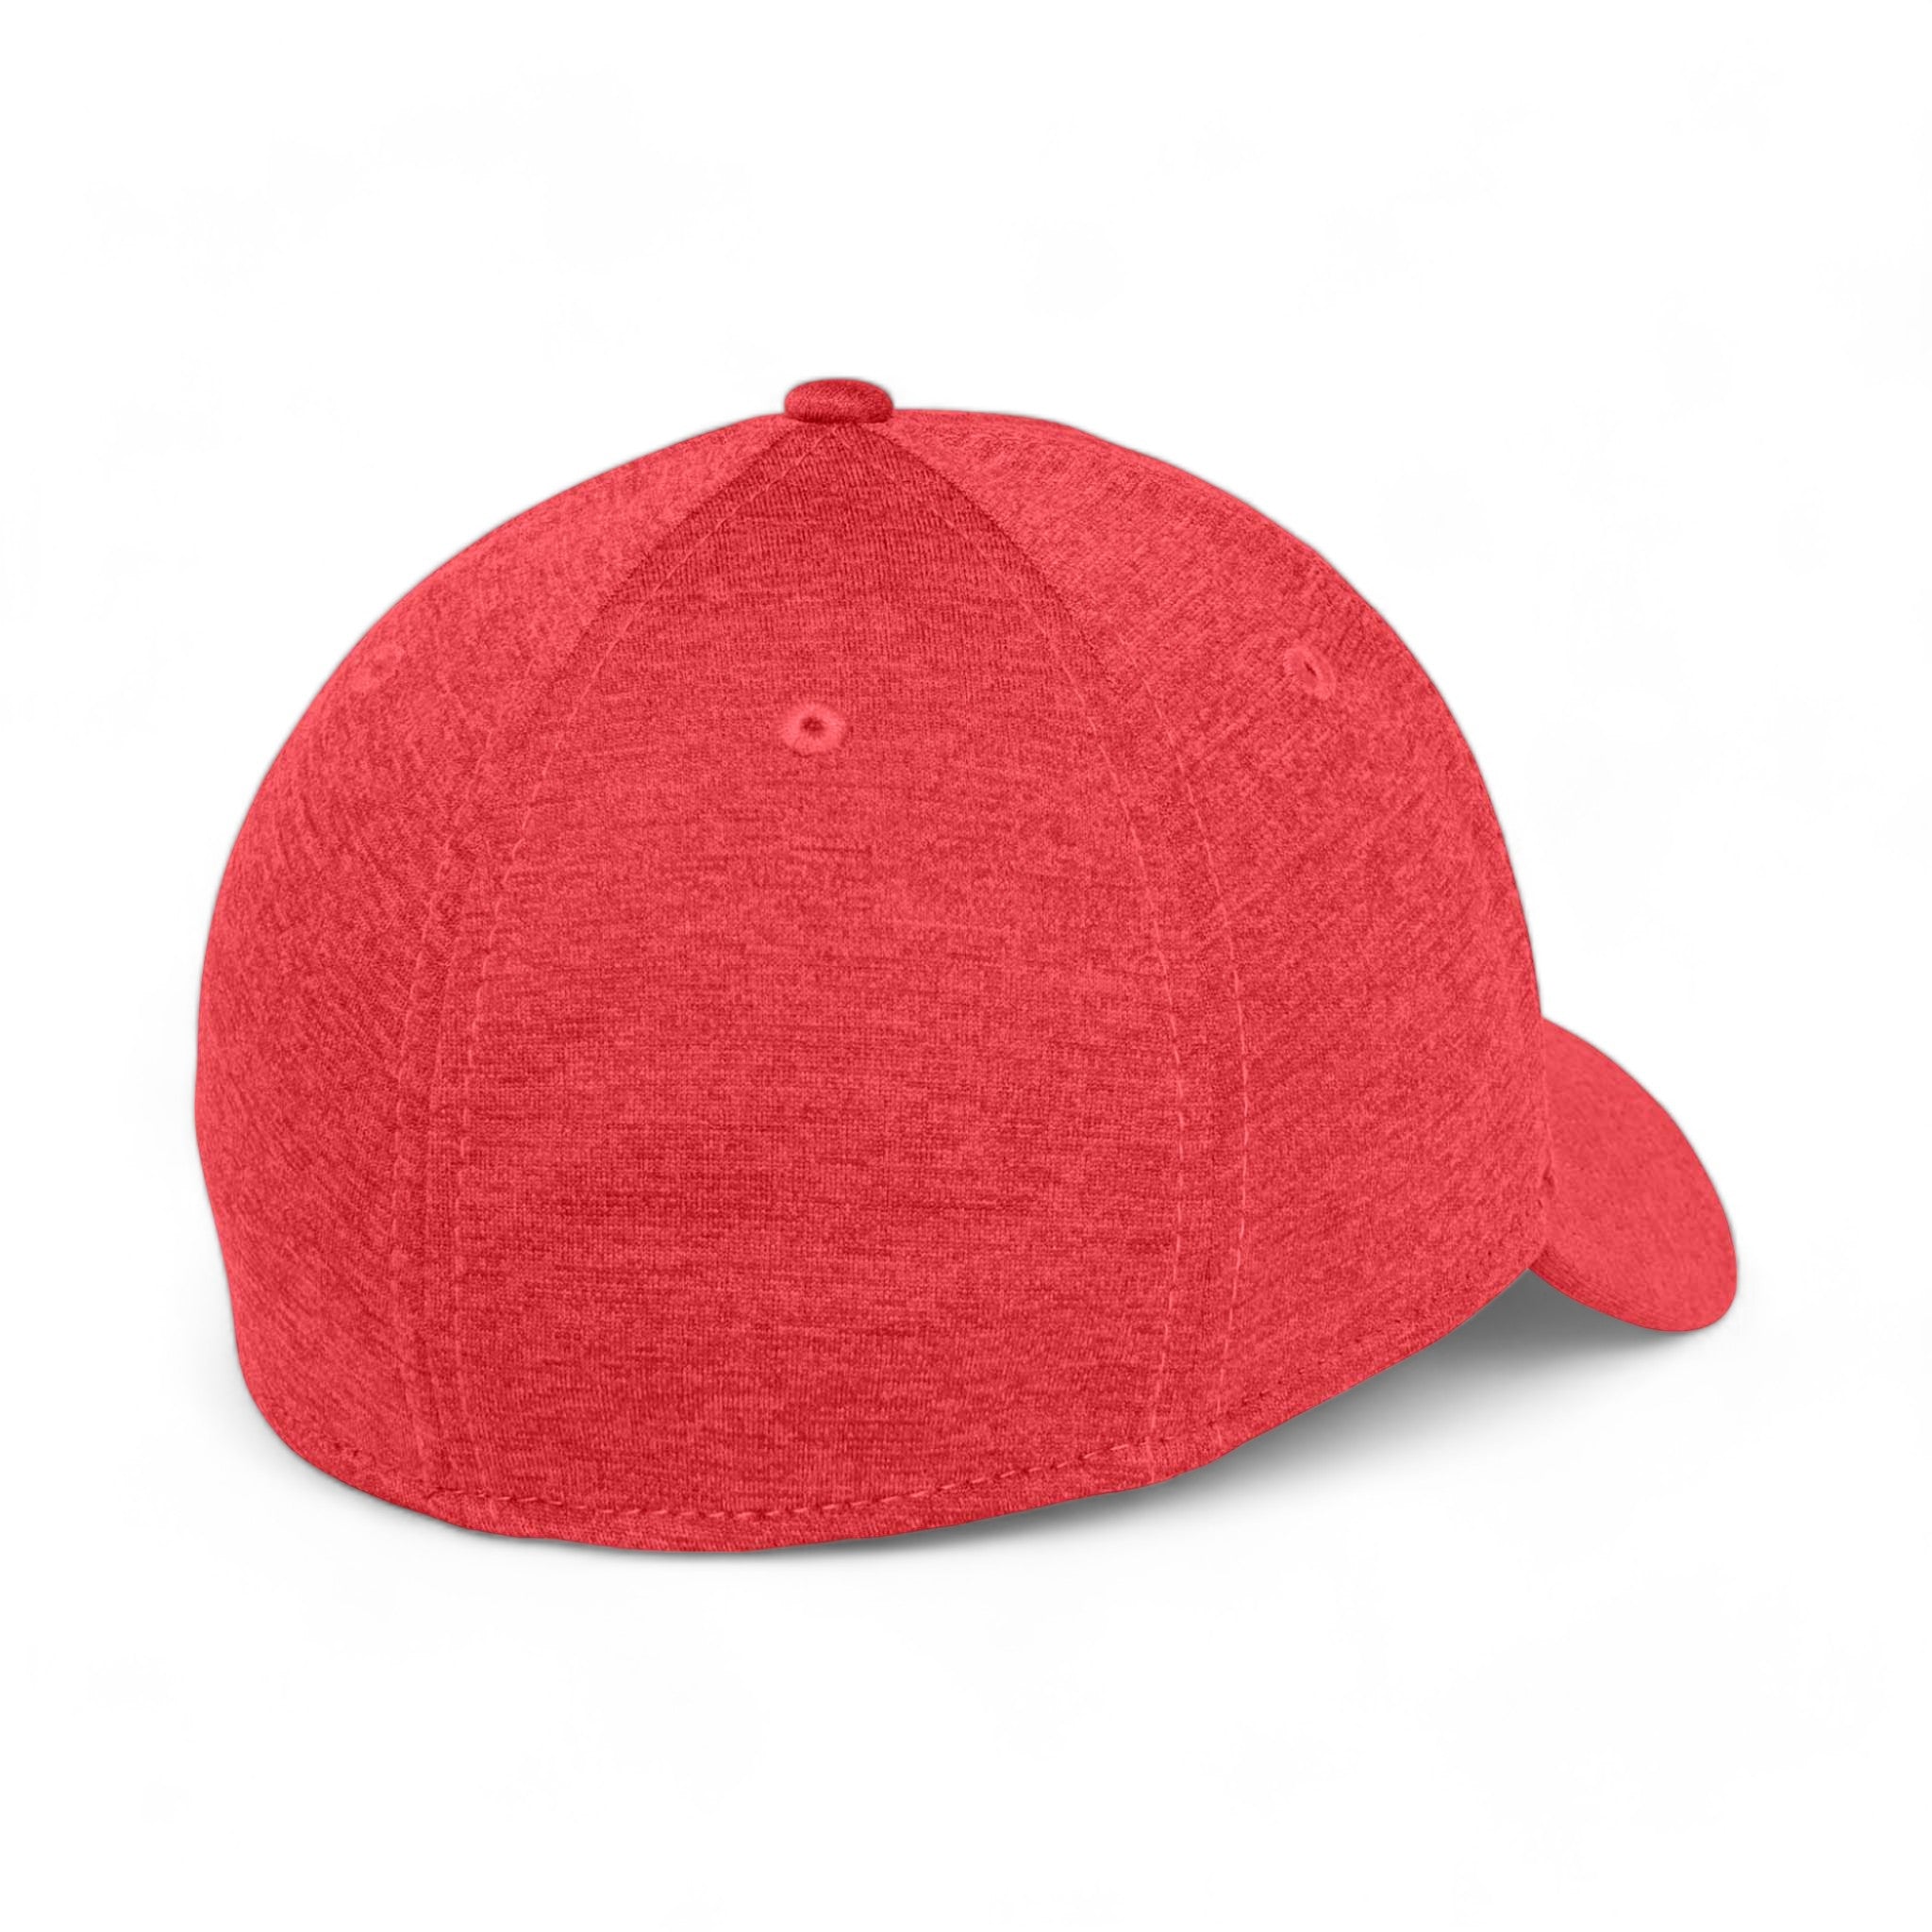 Back view of New Era NE703 custom hat in scarlet shadow heather